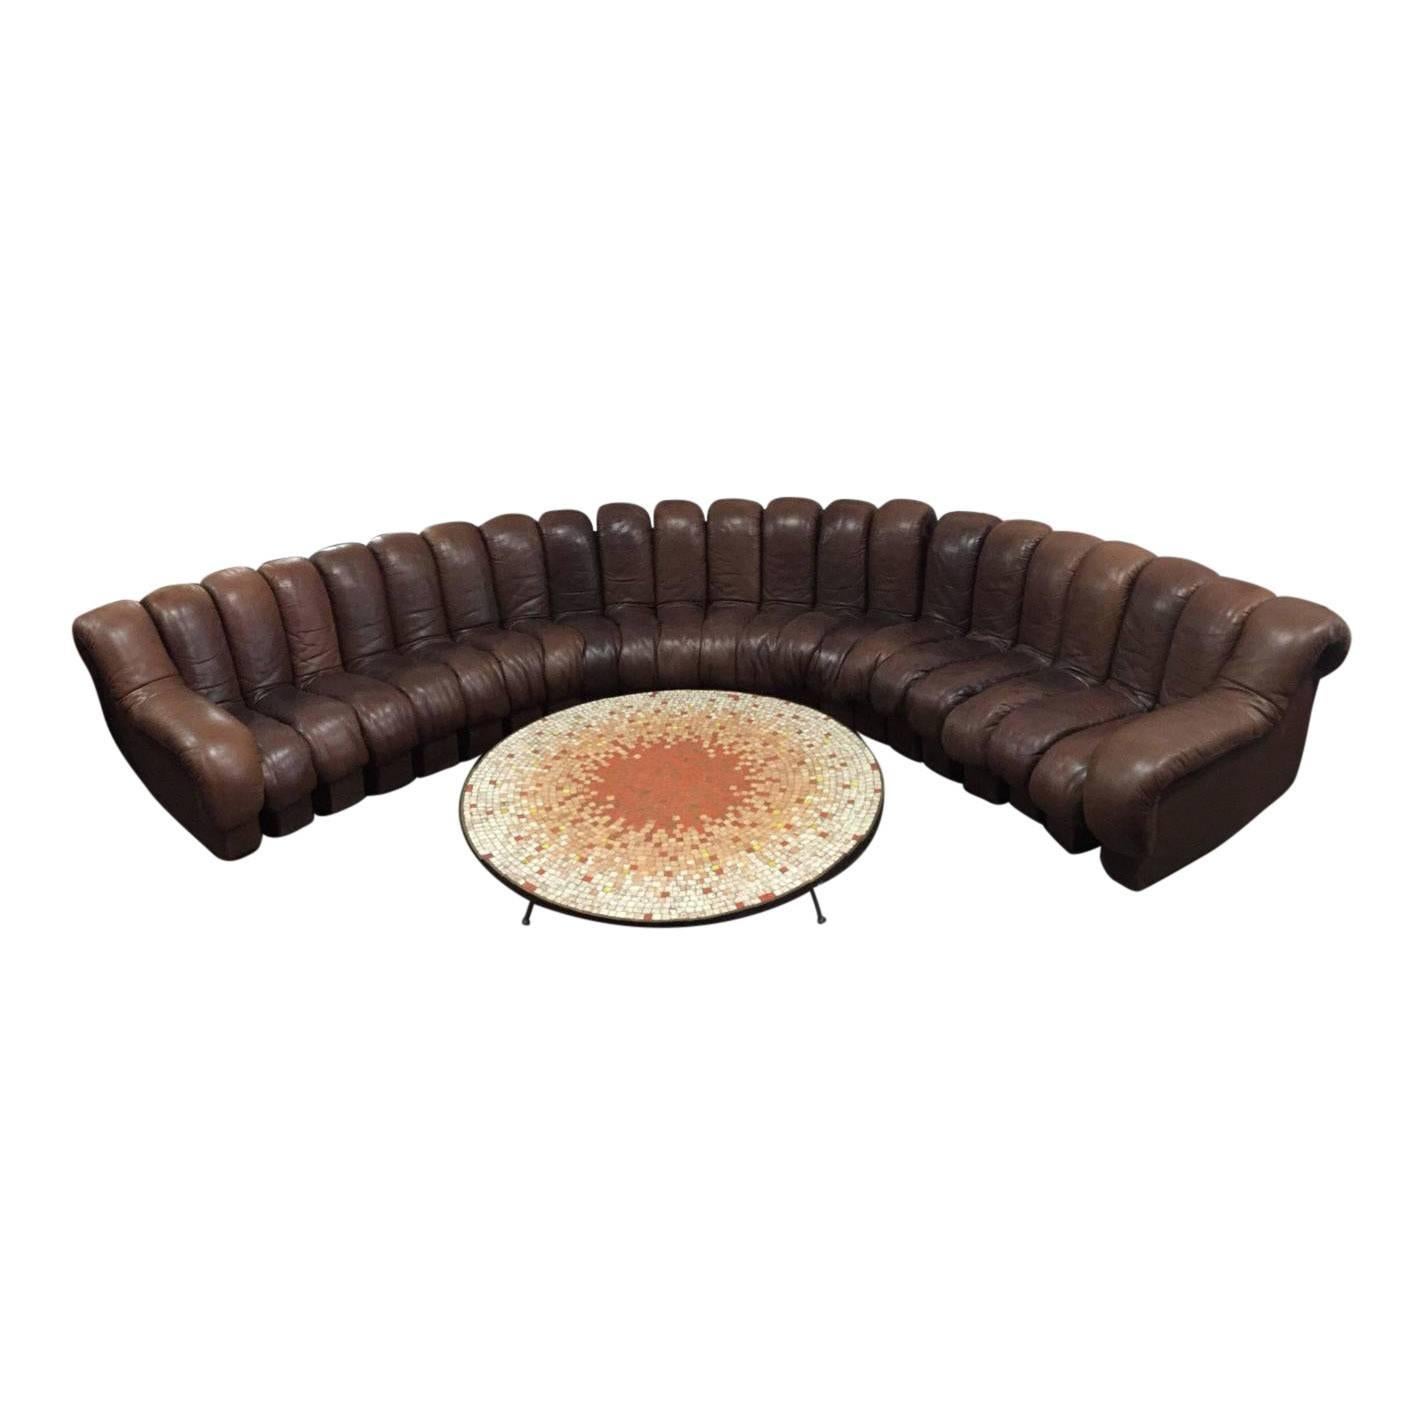 Swiss De Sede DS600 Non Stop Modular Sofa in Brown Leather